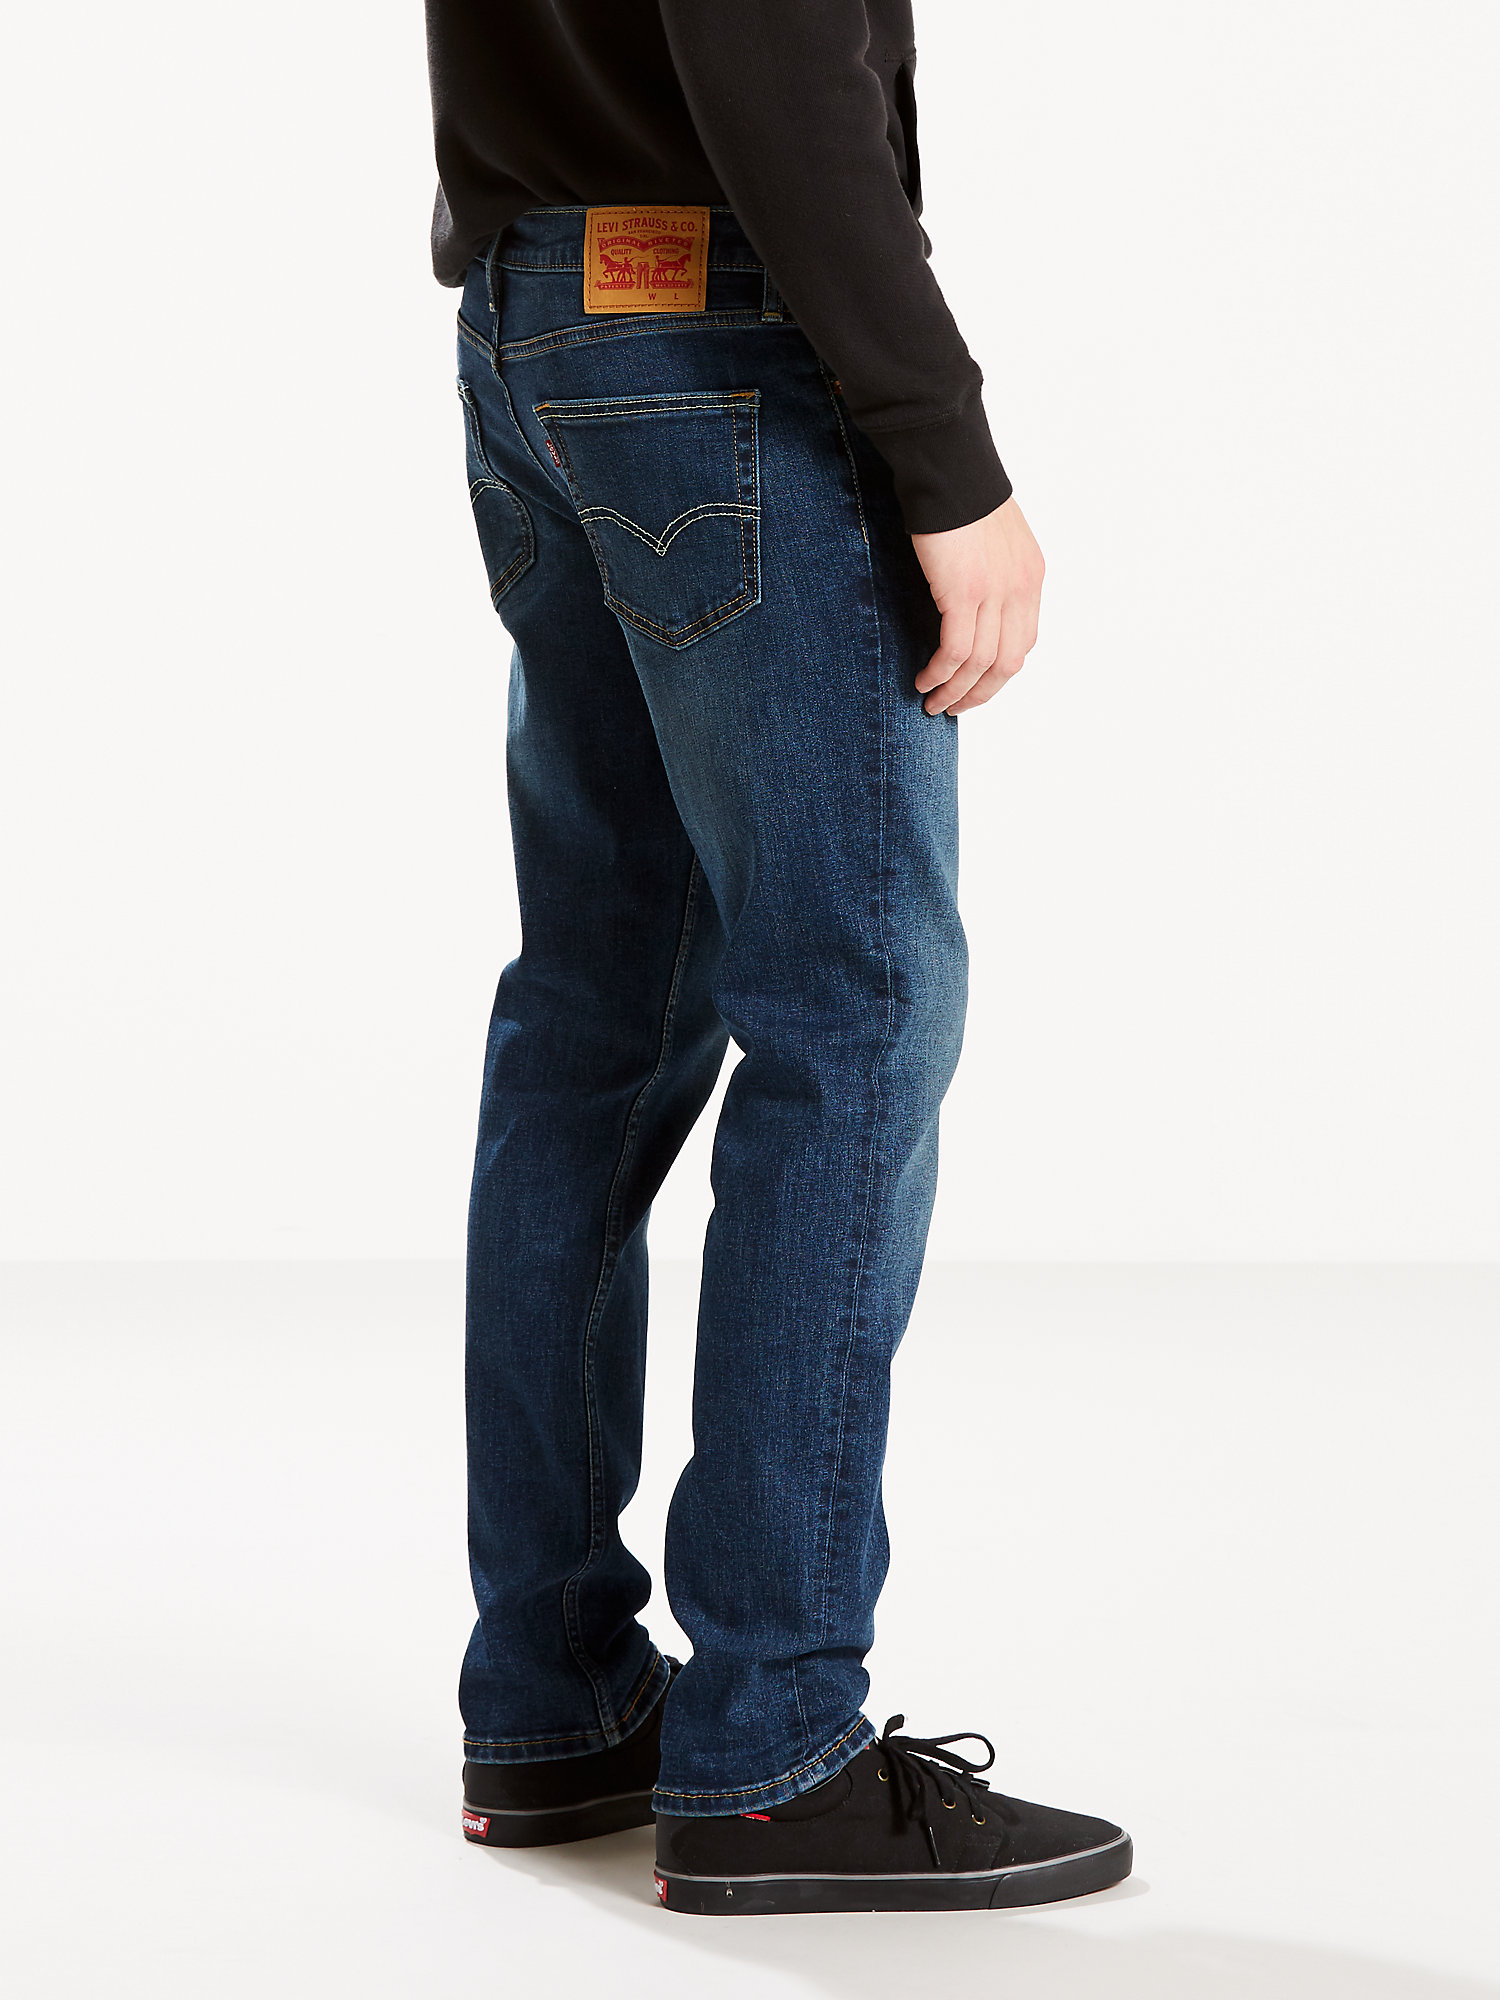 Levi's Men's 511 Slim Fit Jeans - image 4 of 9